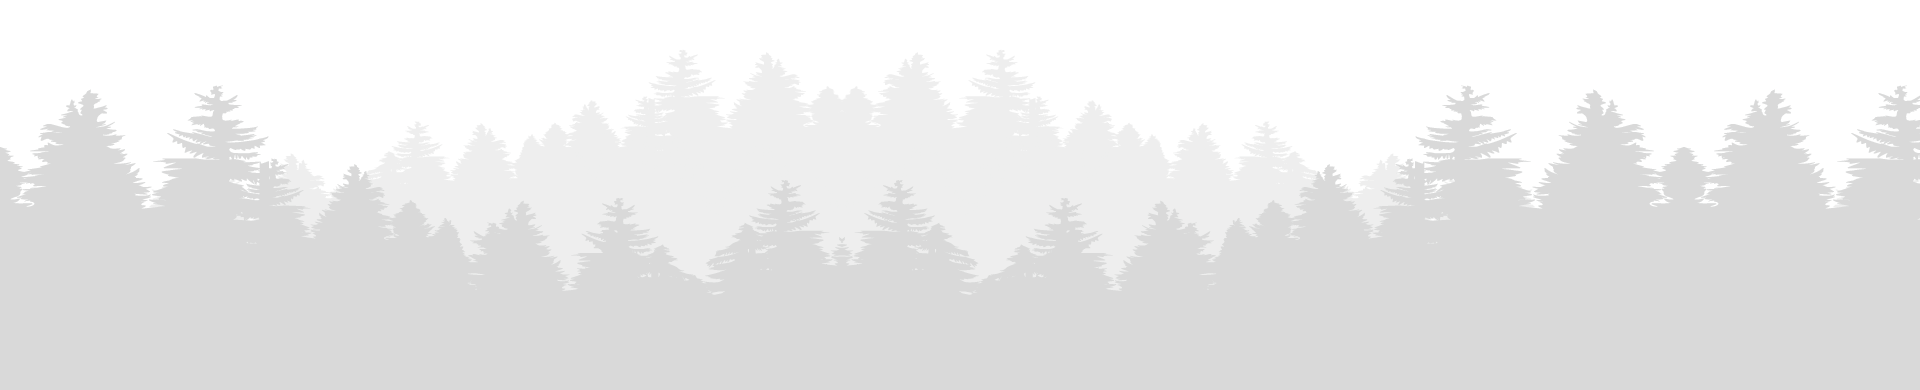 Trees Background